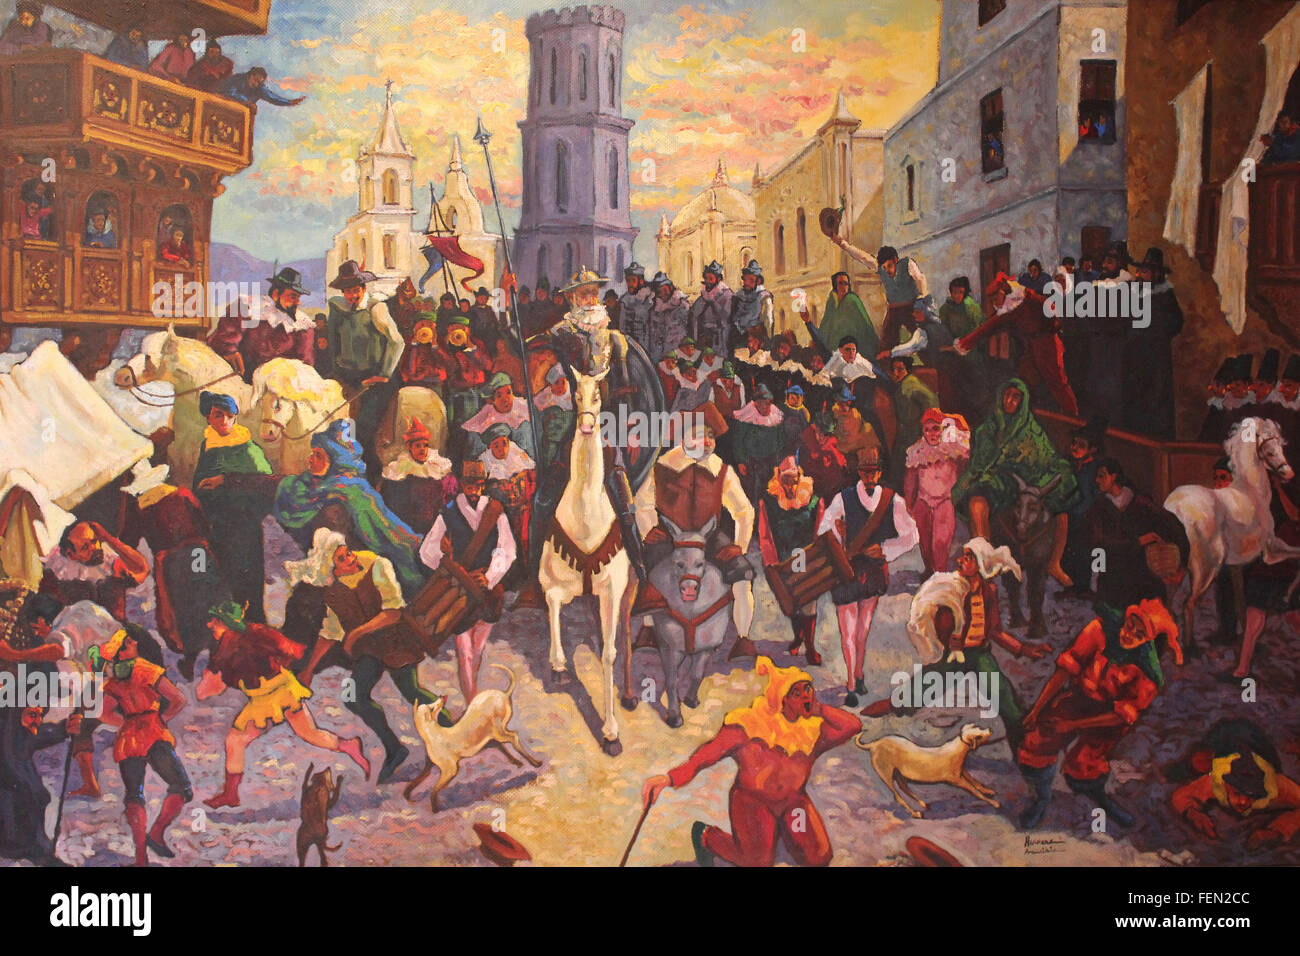 La peinture de Don Quichotte par Arequipa Artiste Percy Herrera 'En un lugar de la mancha' - 'Dans le village de La Mancha' Banque D'Images